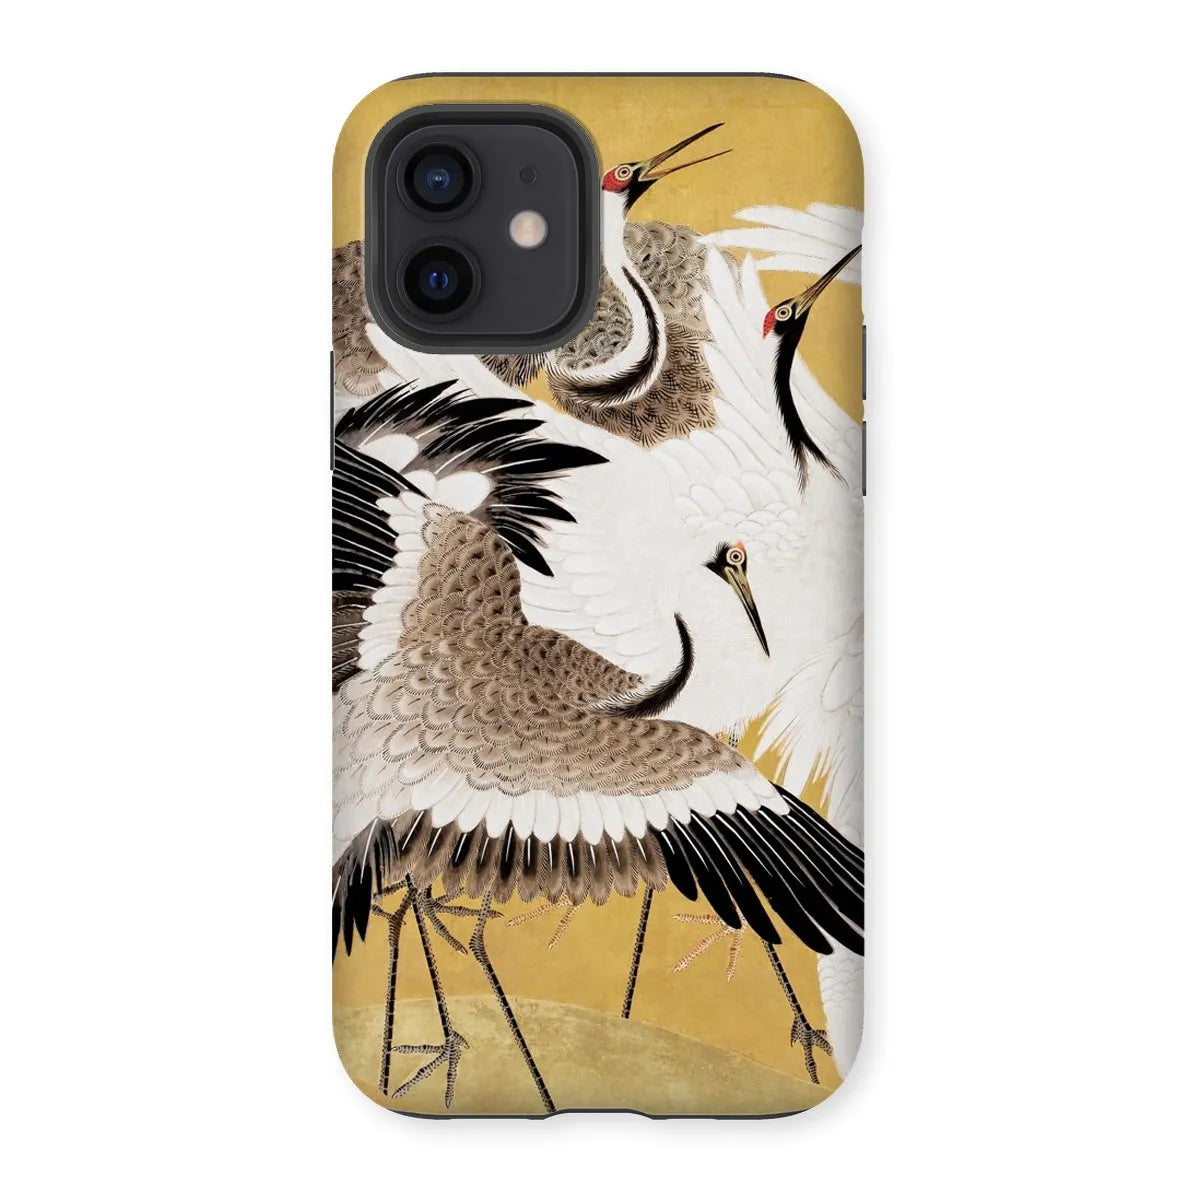 Flock Of Cranes Japanese Bird Art Phone Case - Ishida Yūtei - Iphone 12 / Matte - Mobile Phone Cases - Aesthetic Art